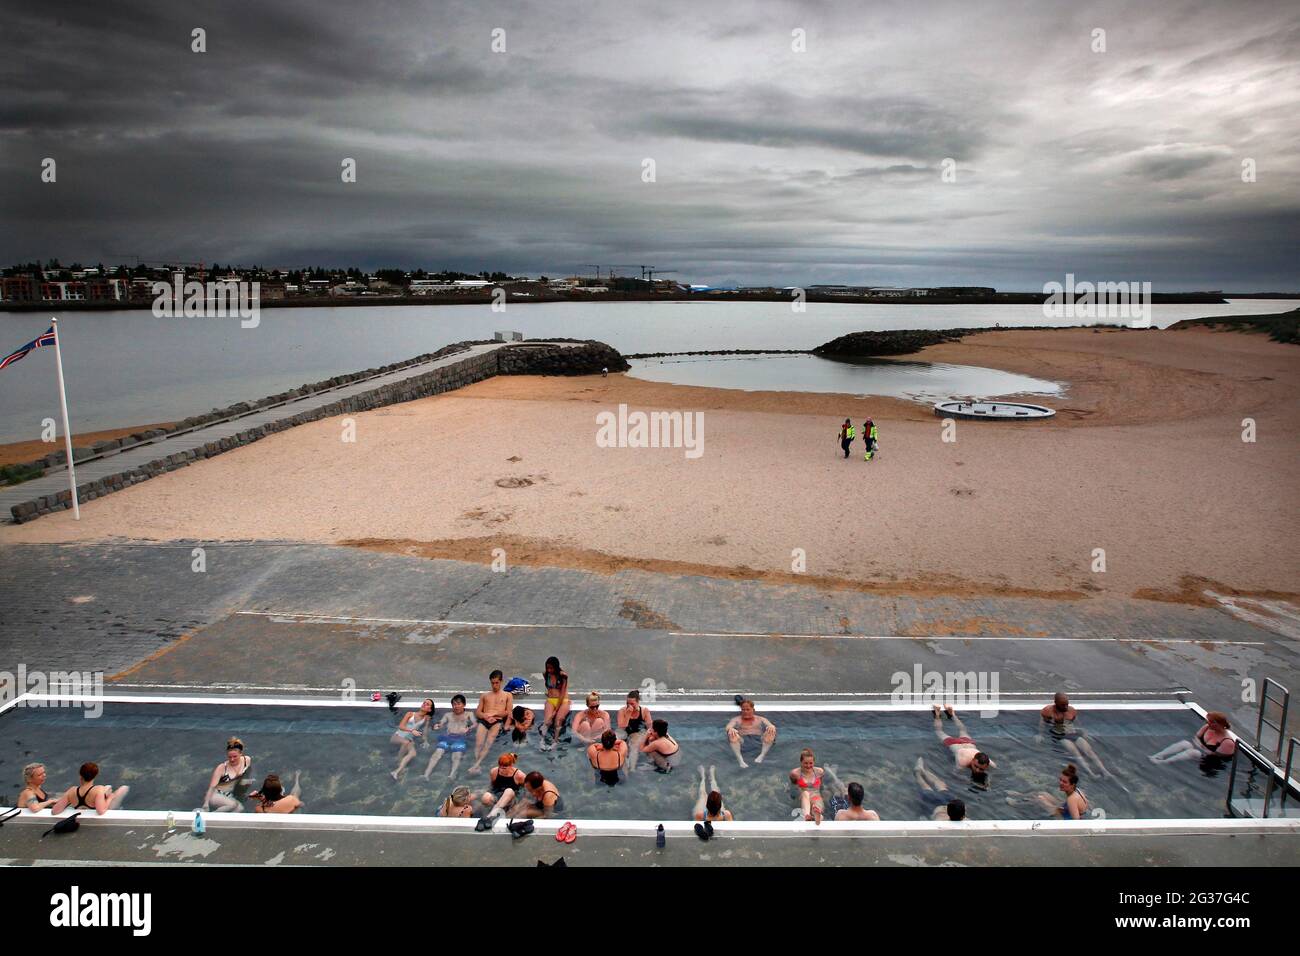 Piscina di acqua calda, piscina sulla spiaggia, bagnanti, Nautholsvik, Reykjavik, Islanda Foto Stock